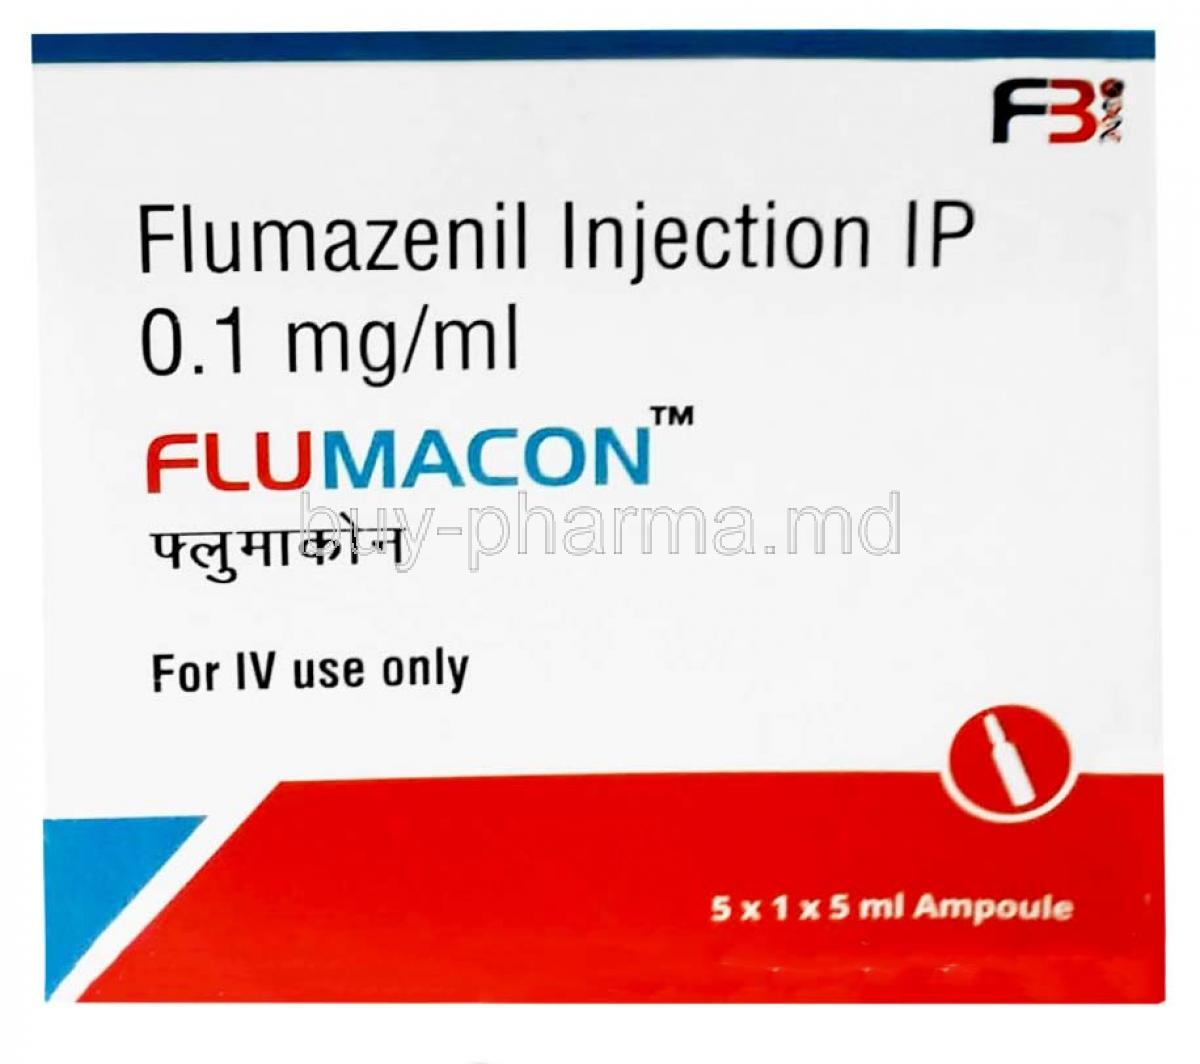 Flumacon Injection, Flumazenil 0.1mg per mL, 5mL X 5 ampoules,Divine Laboratories, Box front view